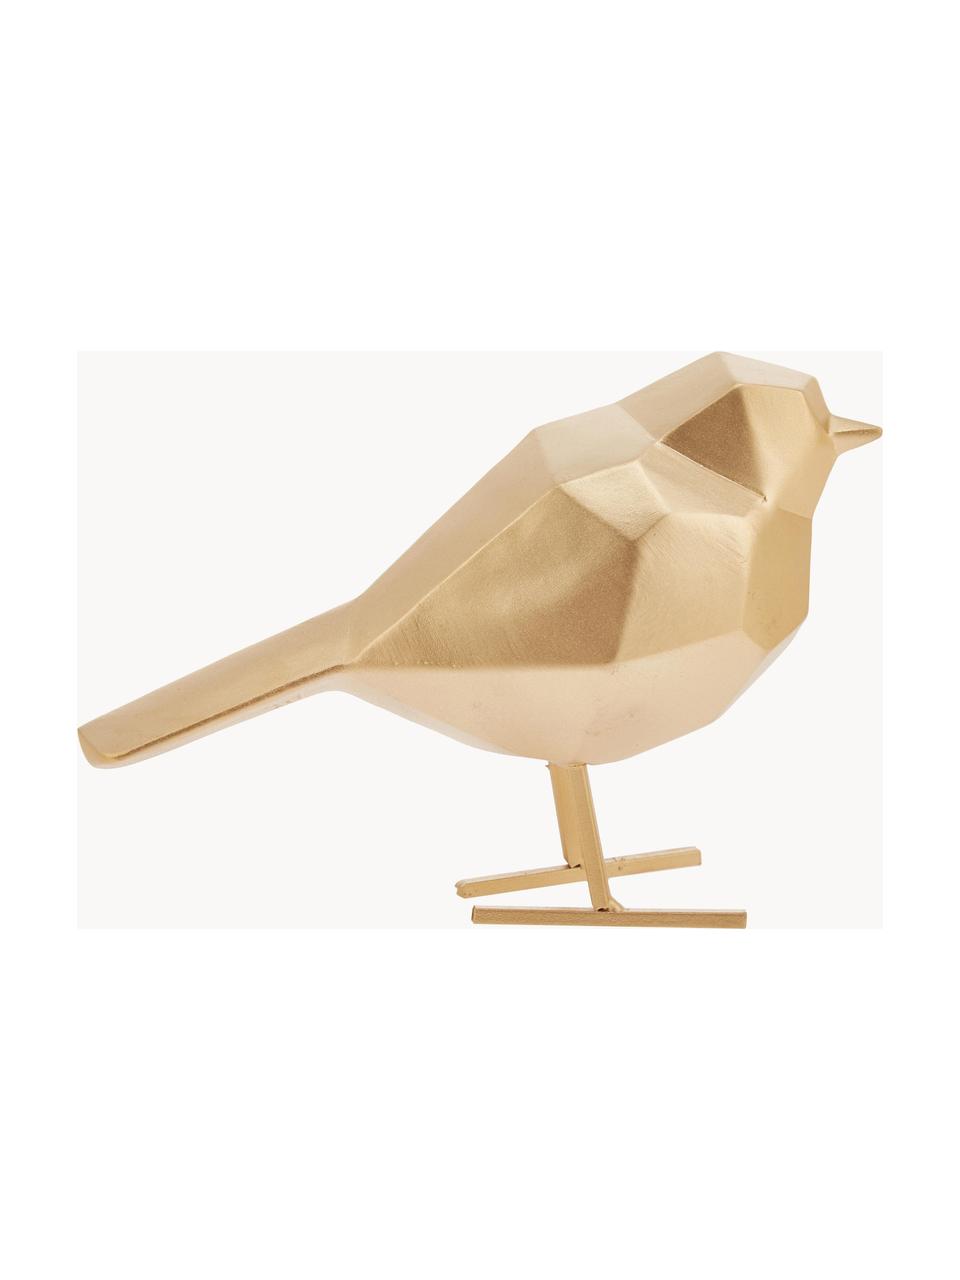 Oggetto decorativo Bird, Poliresina, Dorato, Larg. 17 x Alt. 14 cm